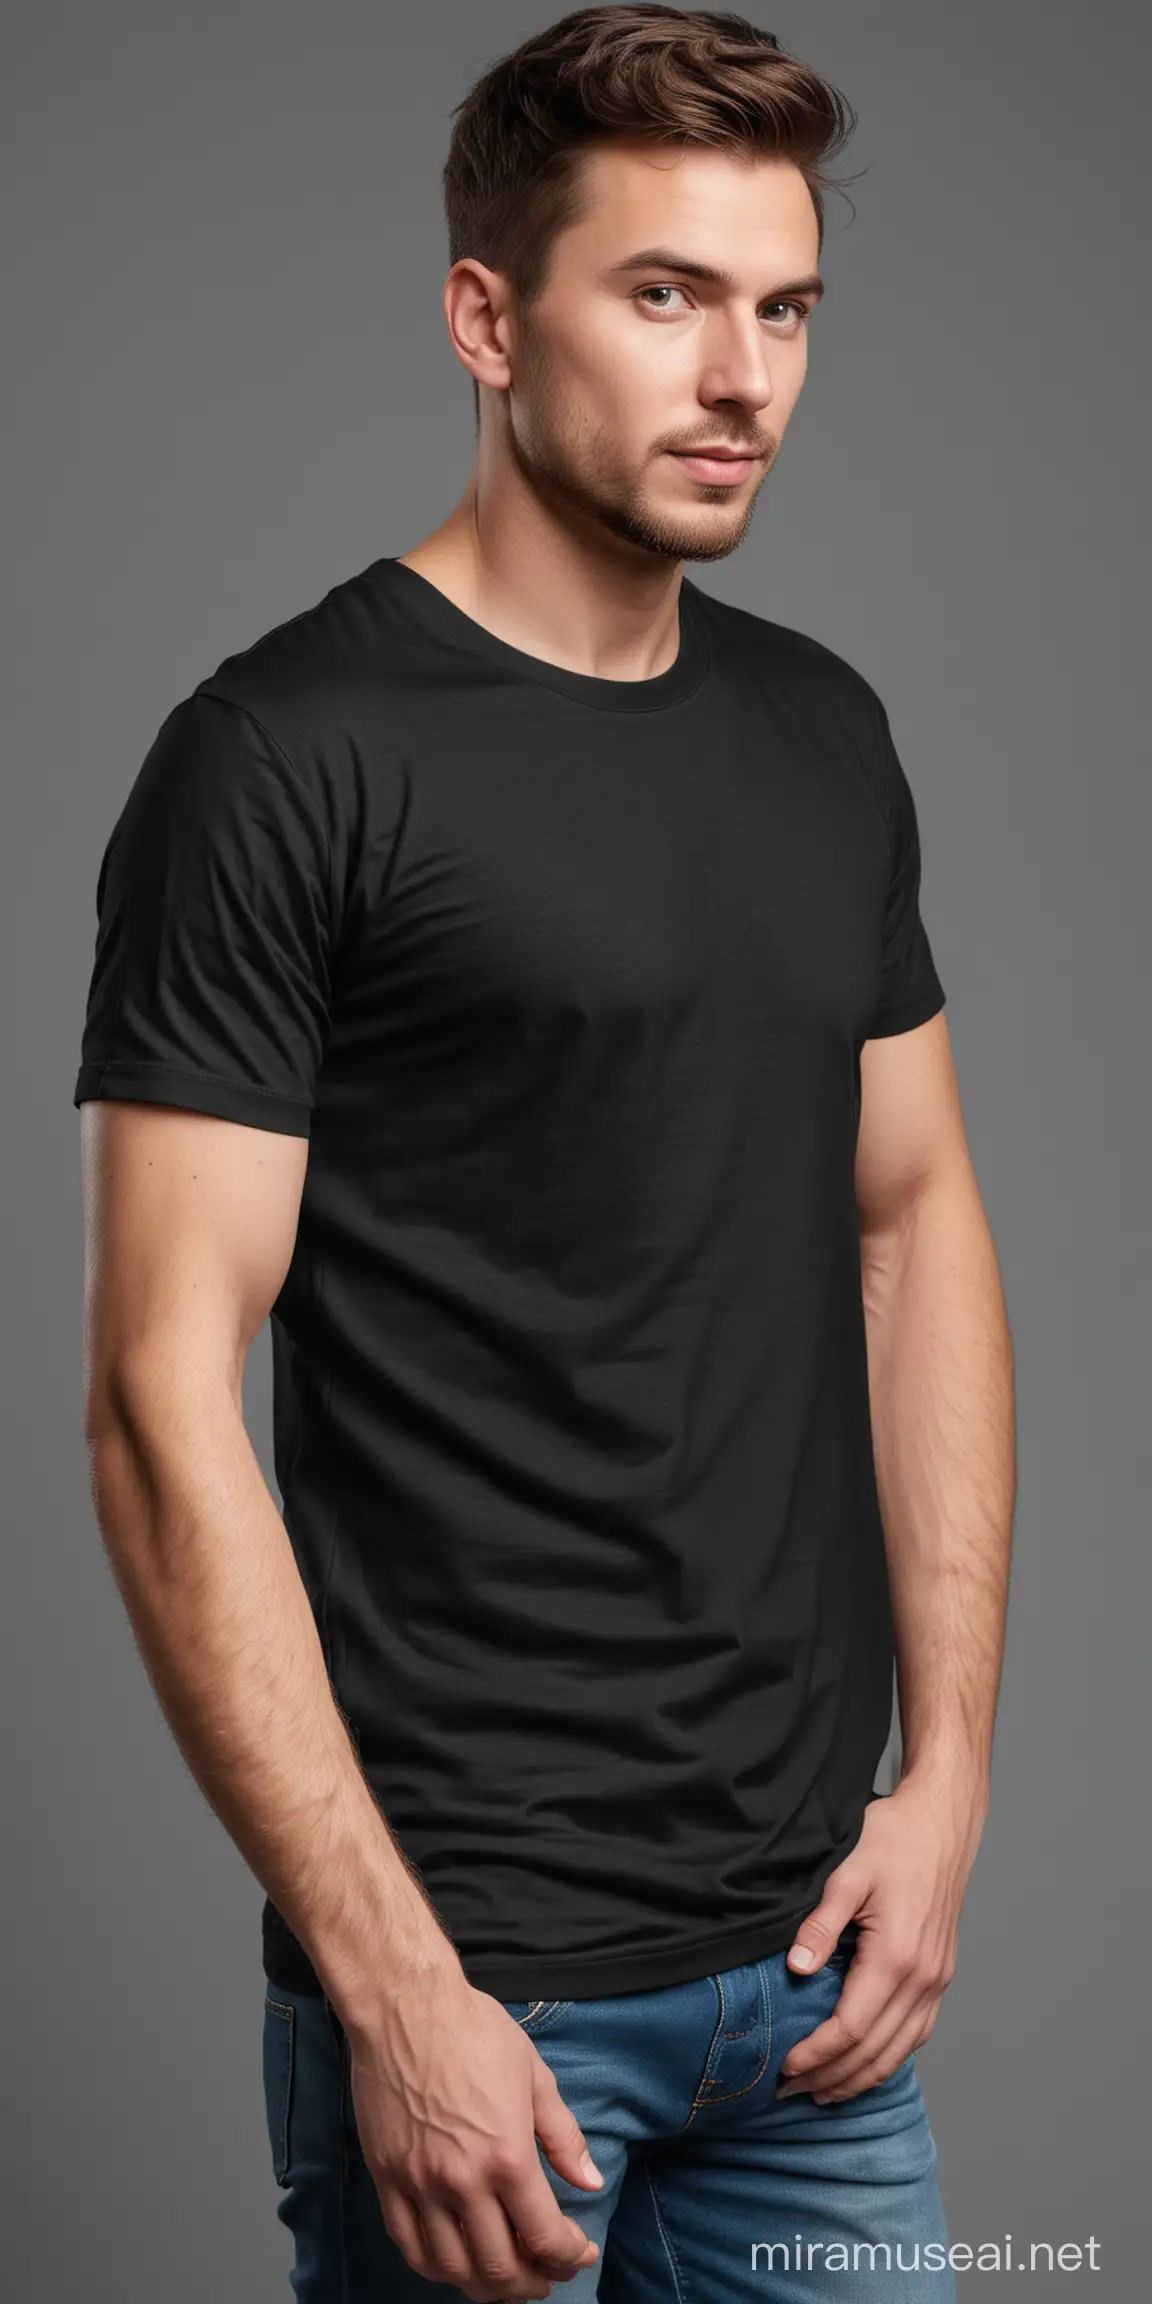 White Man wearing a plain black tshirt posing mockup 